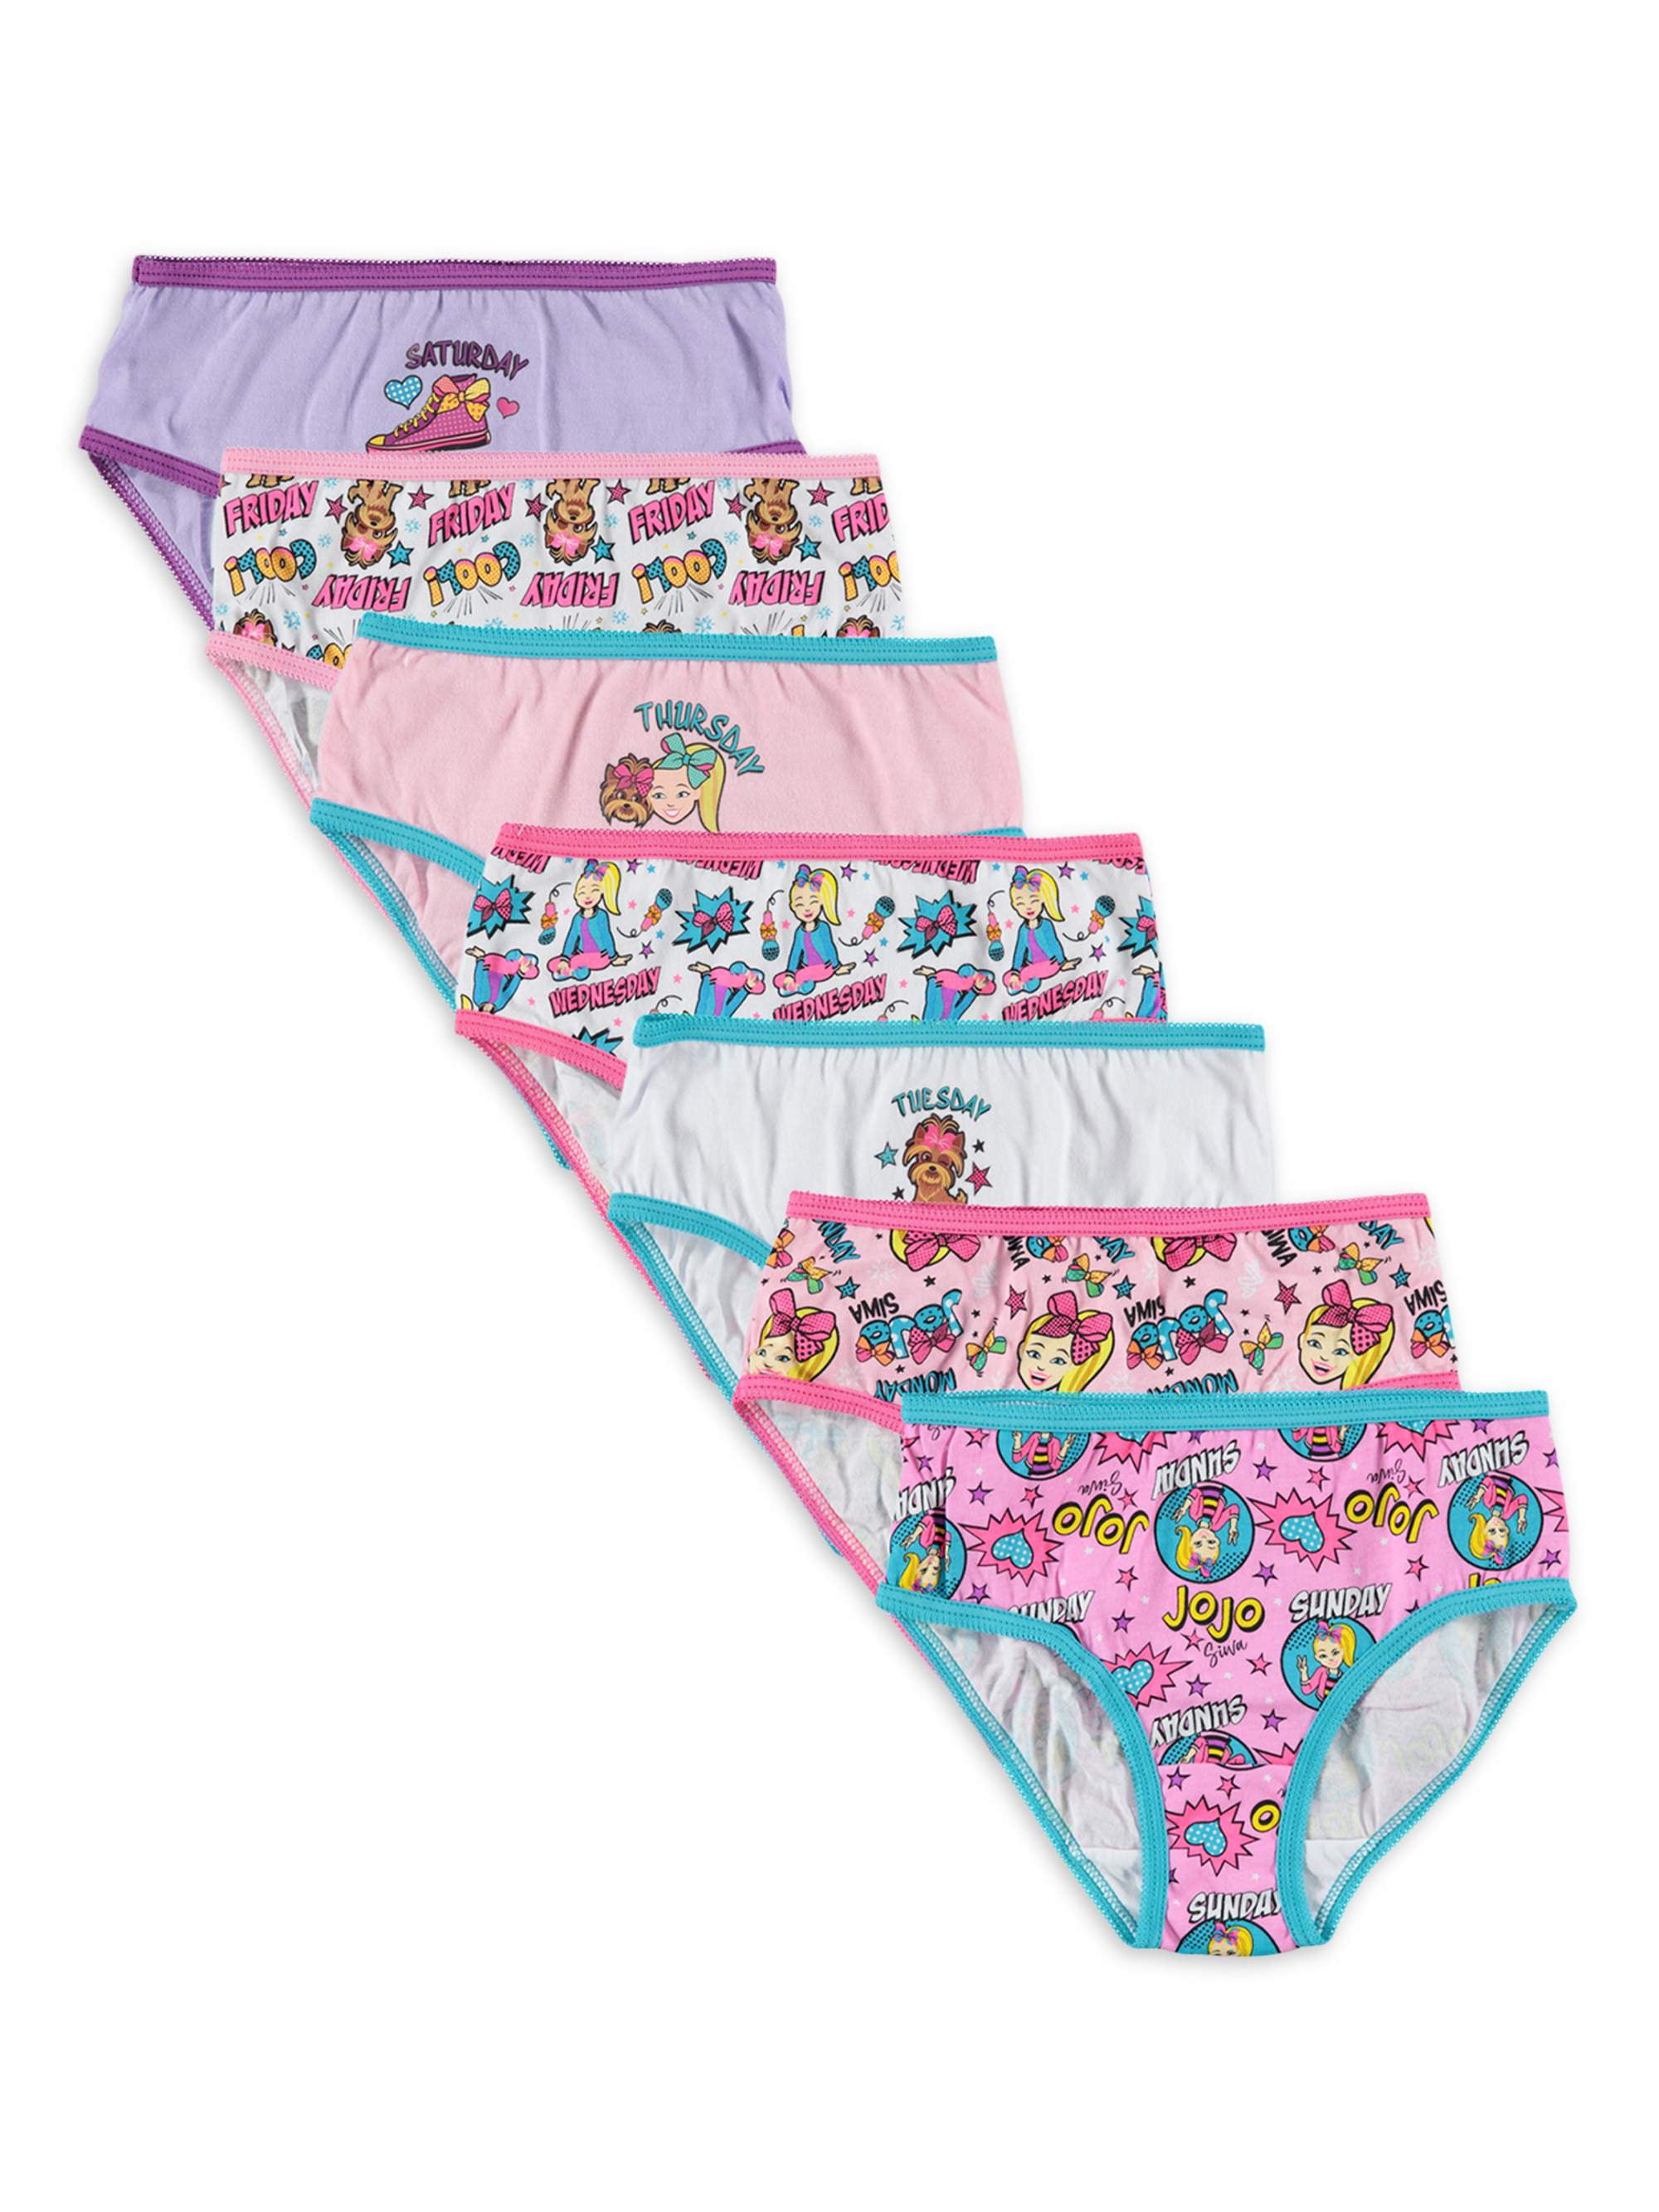 6 PCS Womens Cotton Underwear Ladies Seamless Briefs Panties Knickers 6-14 